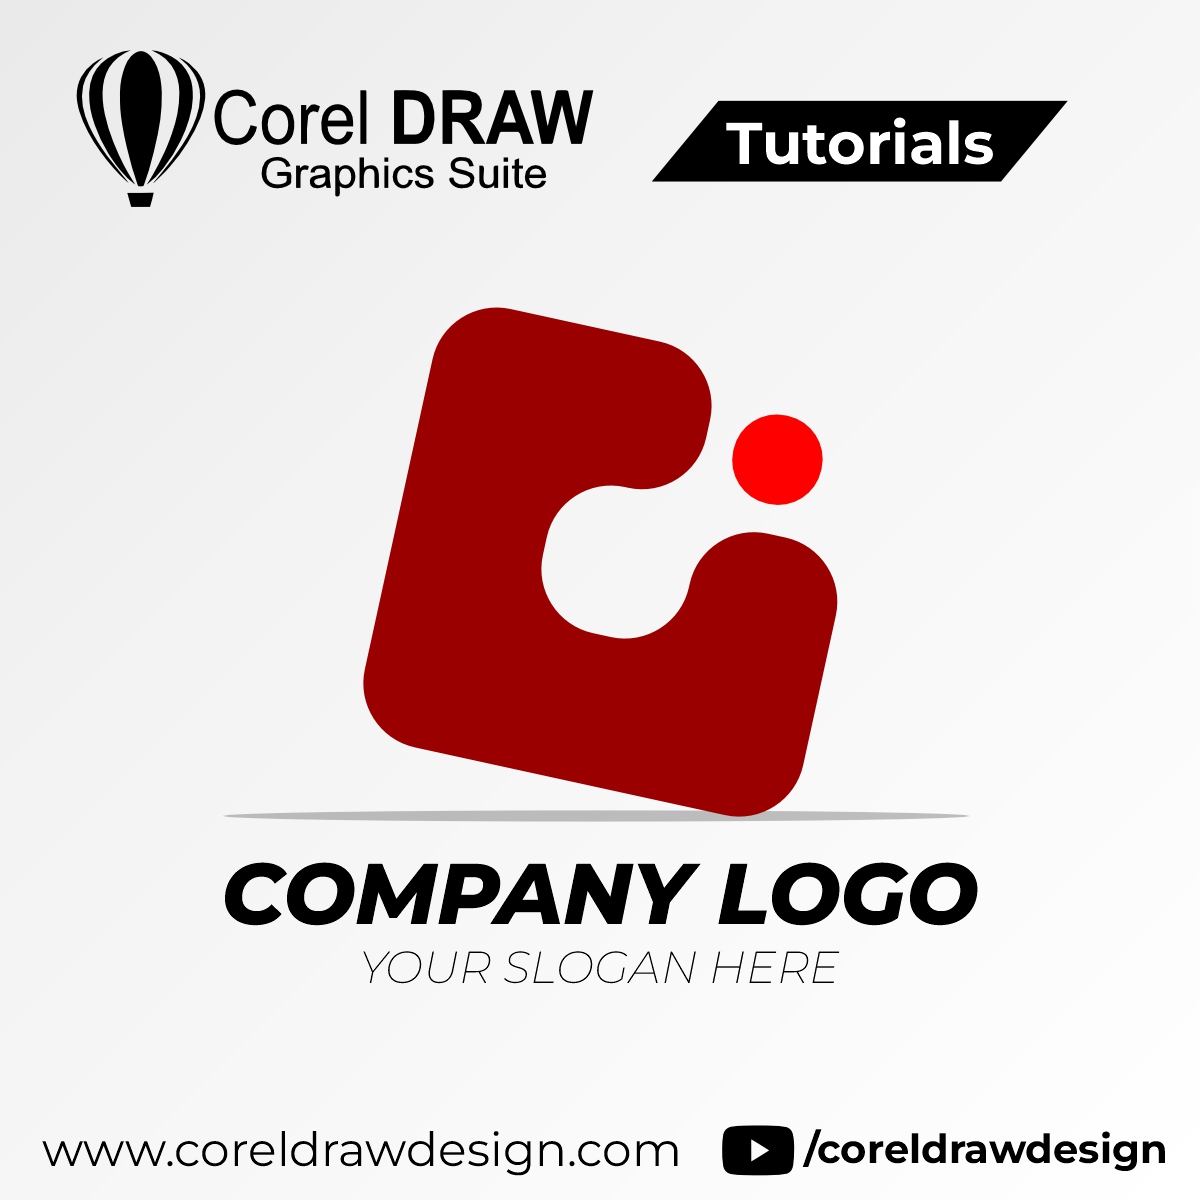 Coreldraw Logo Design Tutorial : How to create logo in corel draw |  #coreldraw #tutorial #vector